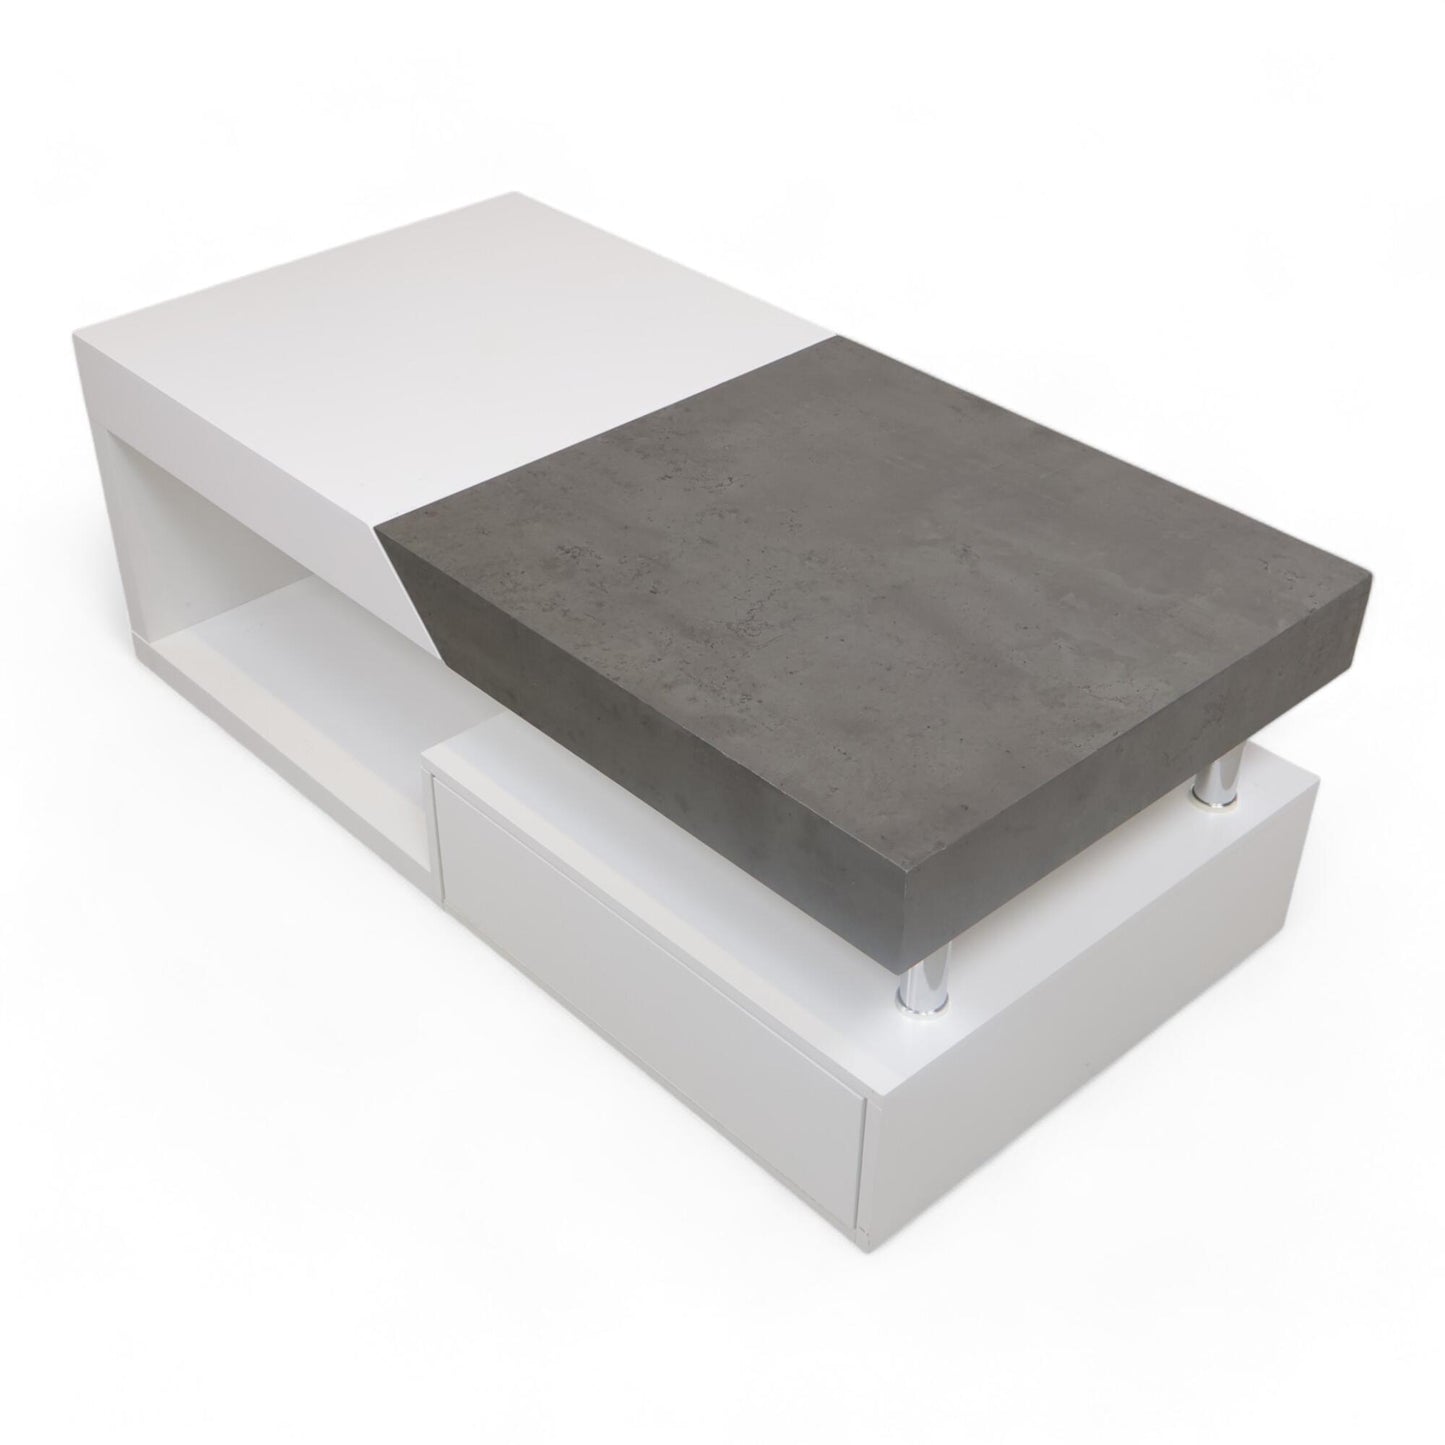 Nyrenset | Sofabord i sort/hvit